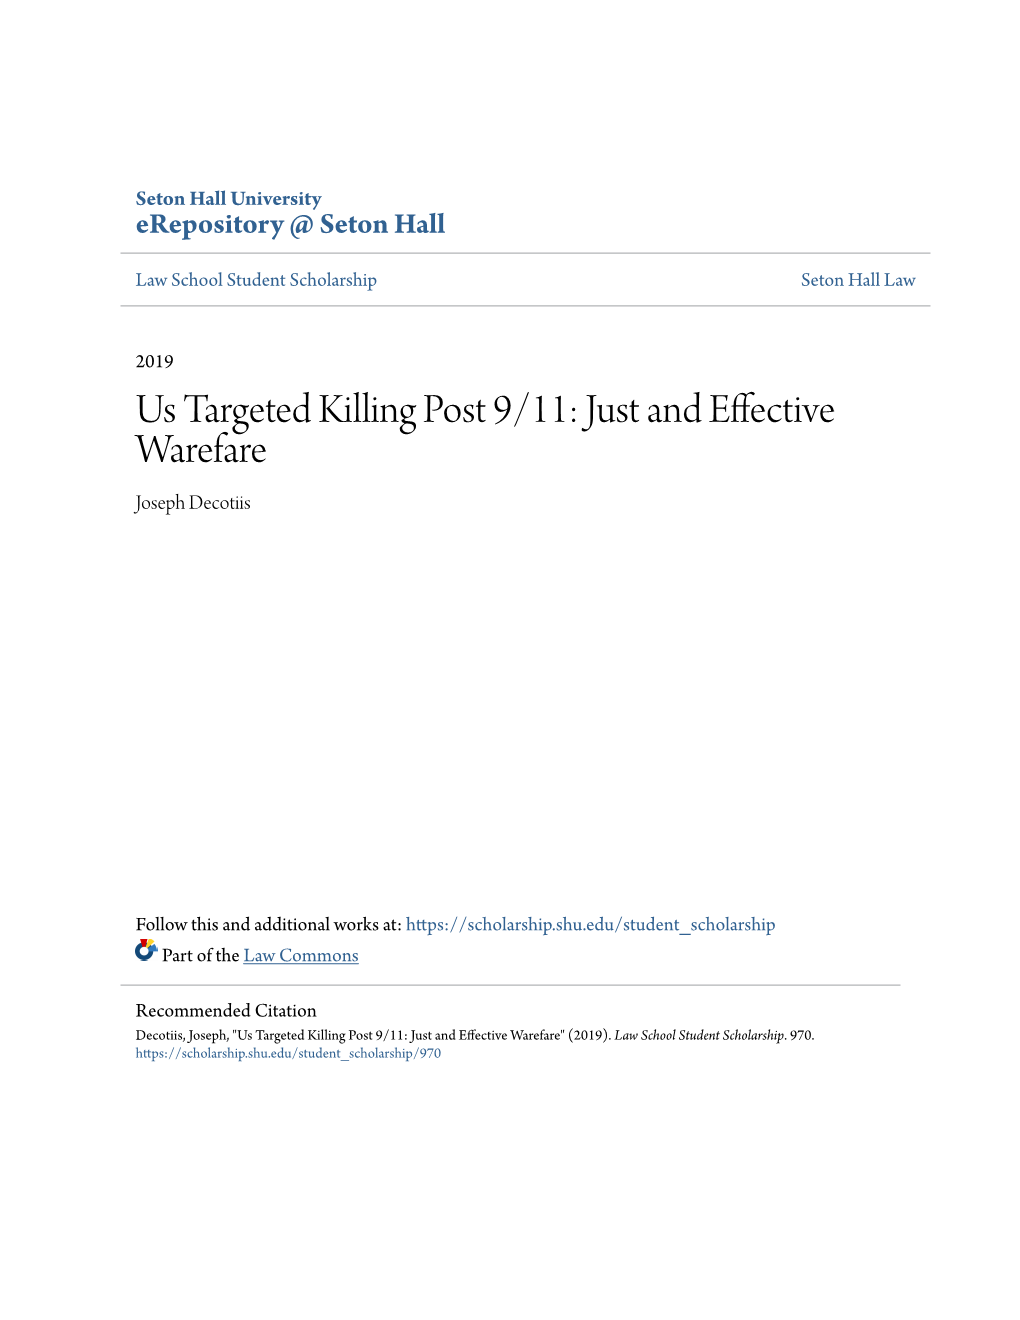 Us Targeted Killing Post 9/11: Just and Effective Warefare Joseph Decotiis